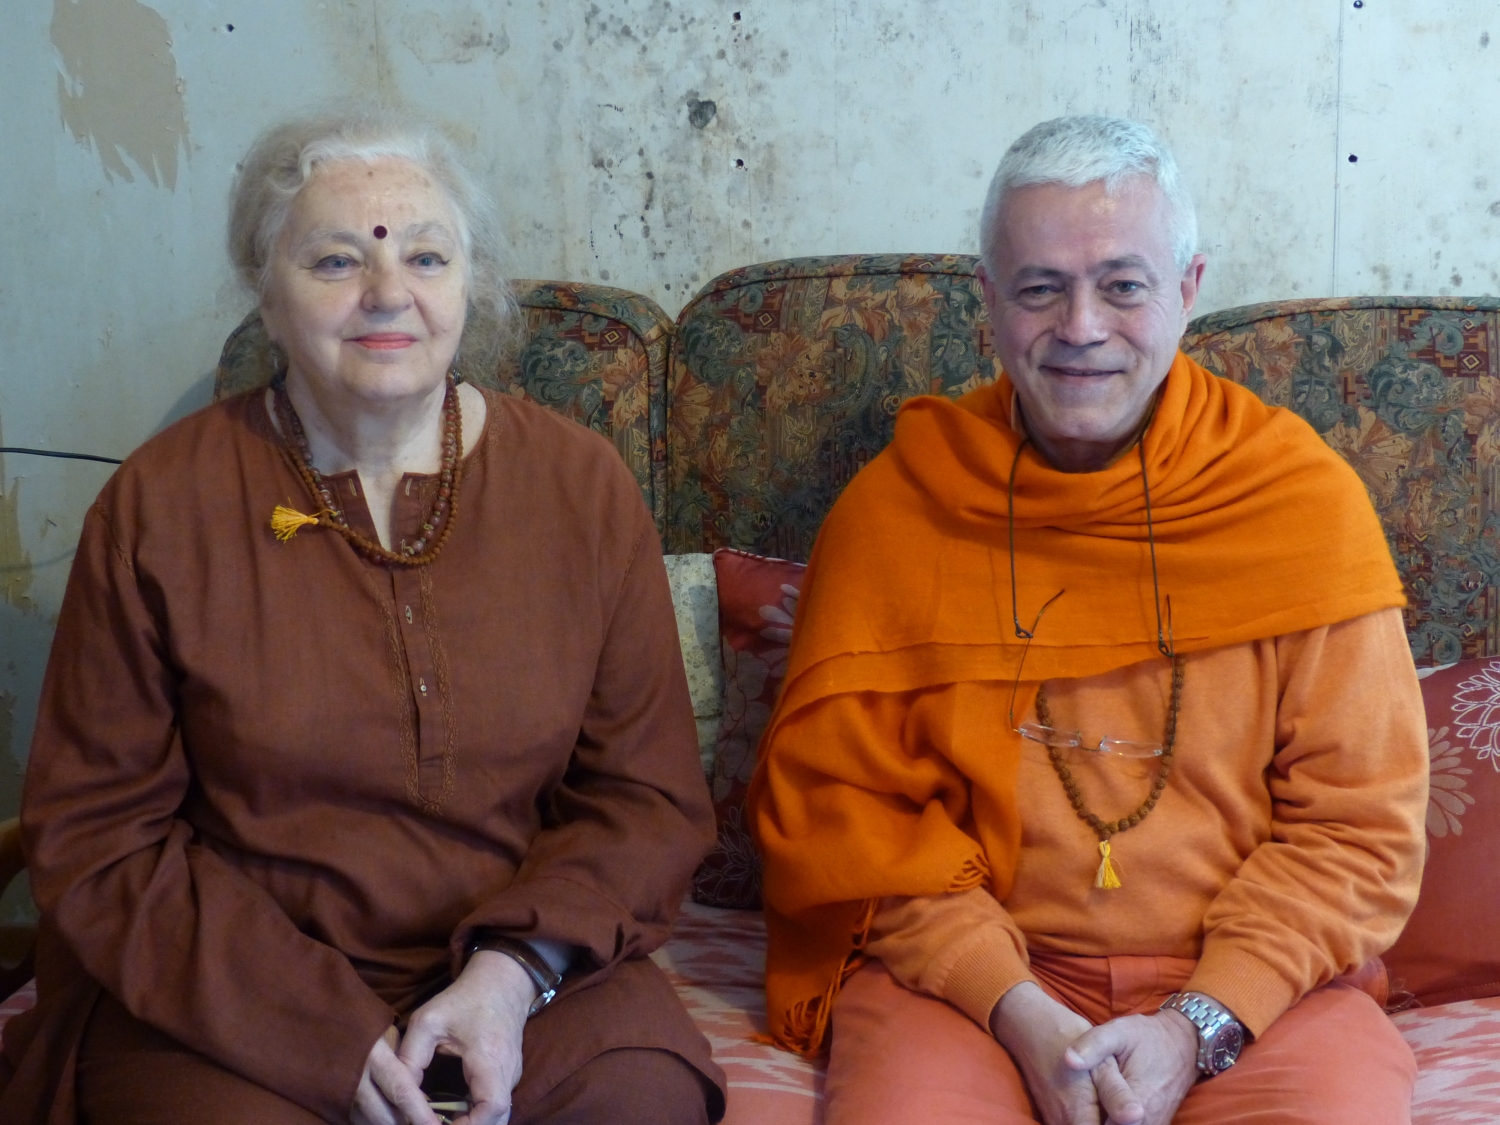 Meeting of H.H. Jagat Guru Amrta Sūryānanda Mahā Rāja with Tara Michaël - Arles, Provence - 2013, May